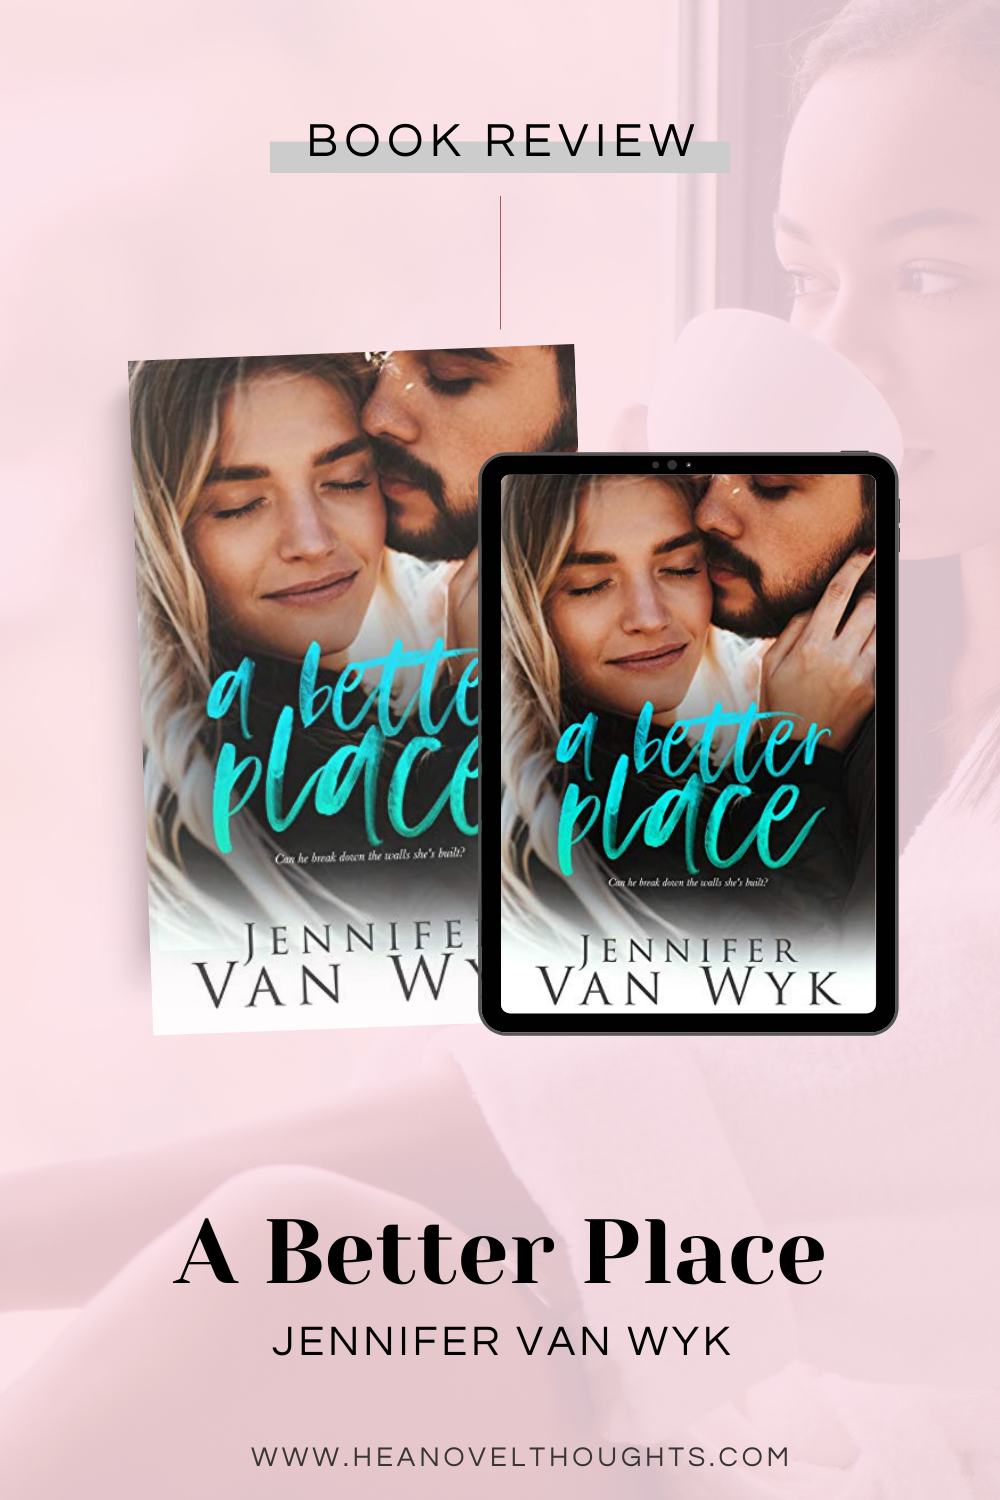 A Better Place by Jennifer Van Wyk